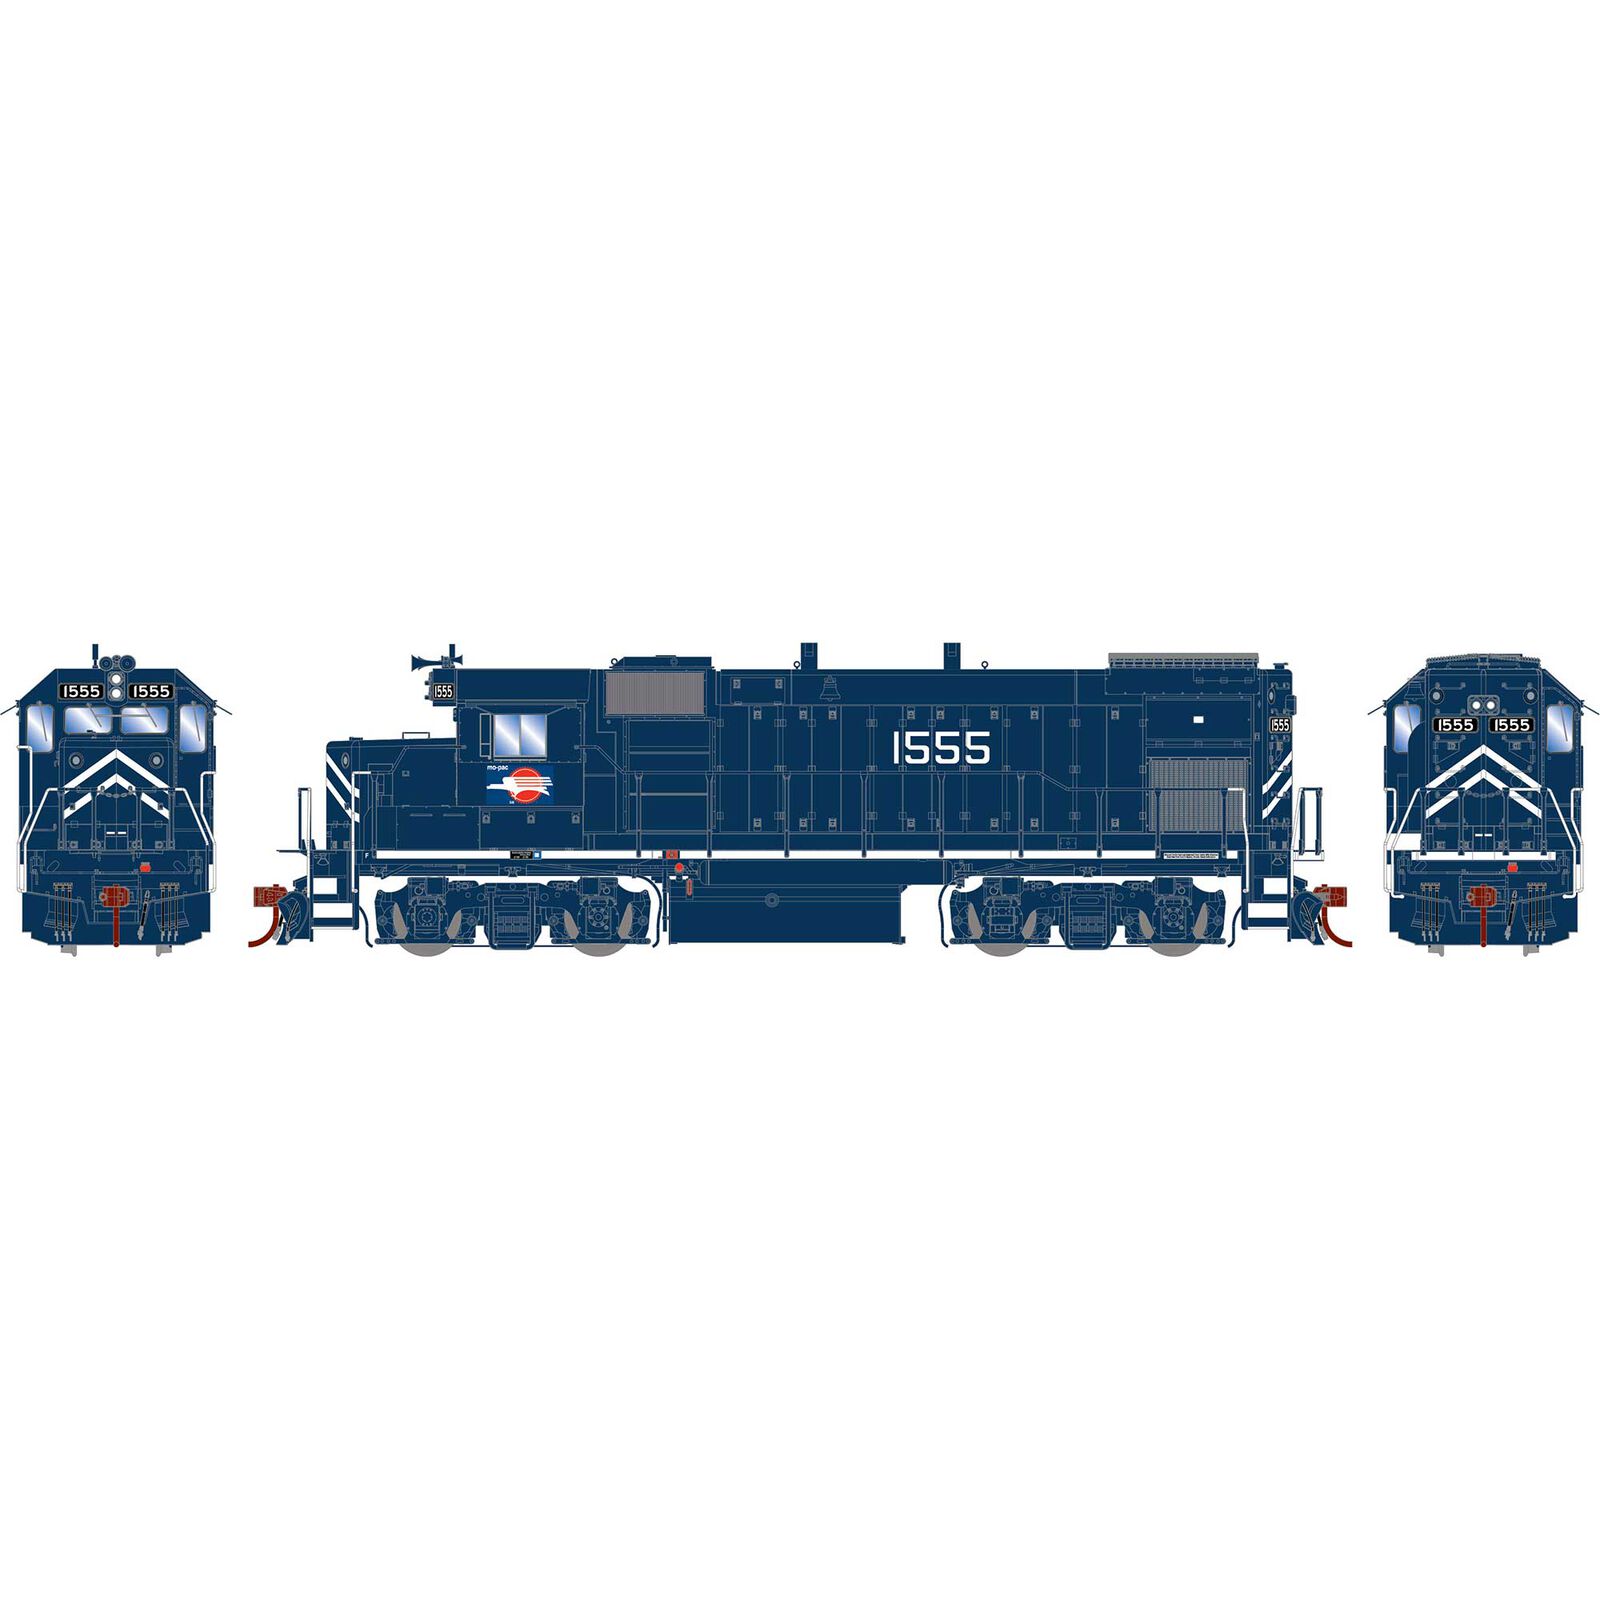 HO GP15-1 Locomotive, Missouri Pacific #1555